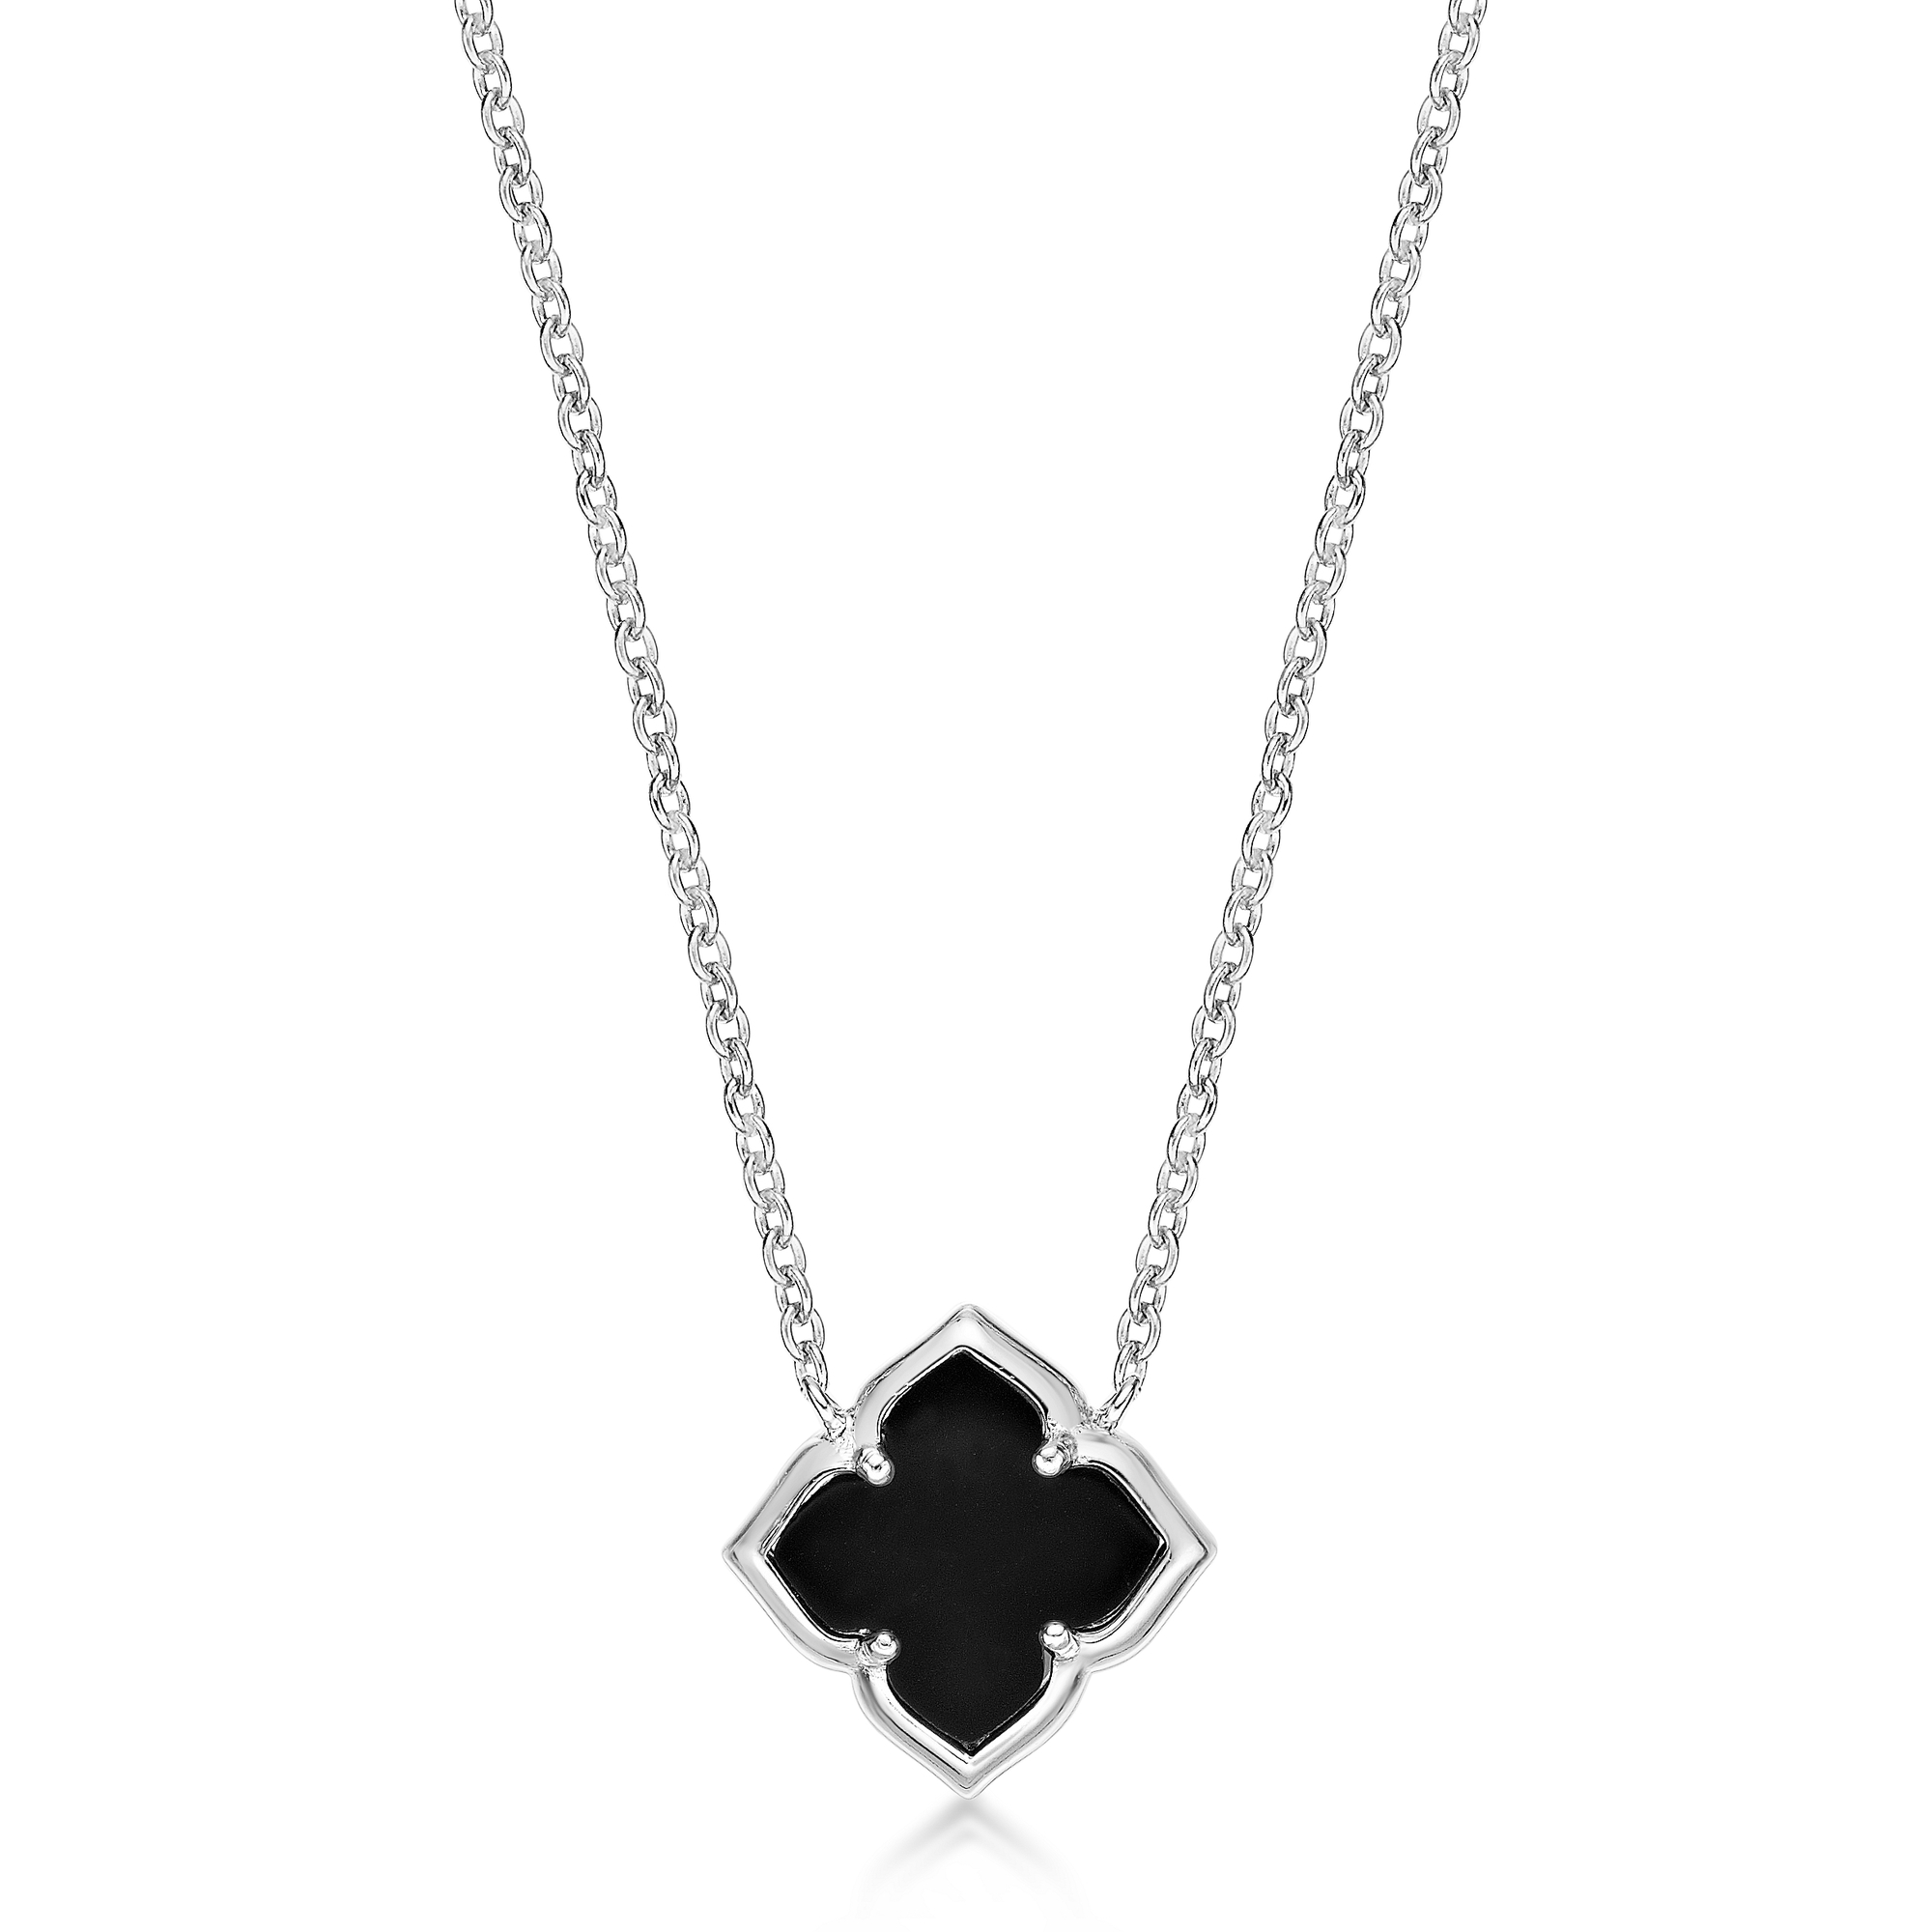 52183-necklace-flora-sterling-silver-52183-1.jpg